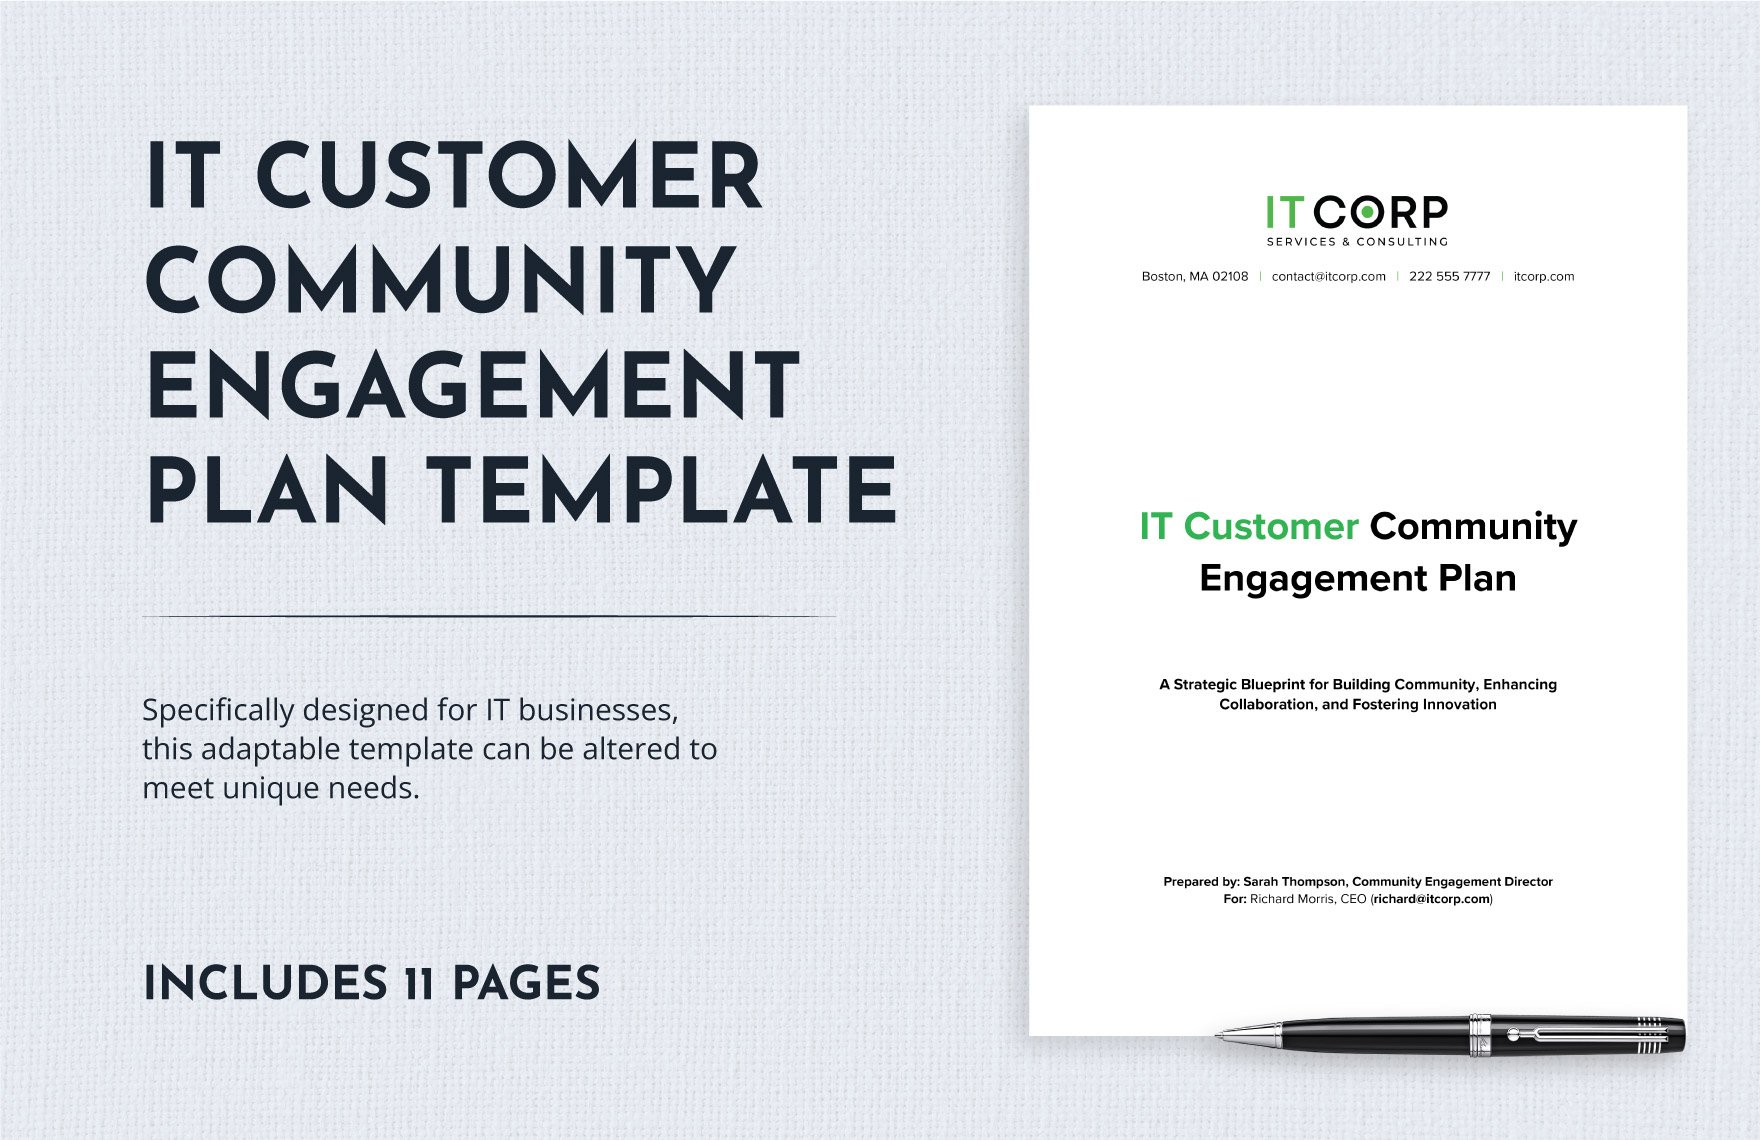 IT Customer Community Engagement Plan Template in Word, Google Docs, PDF